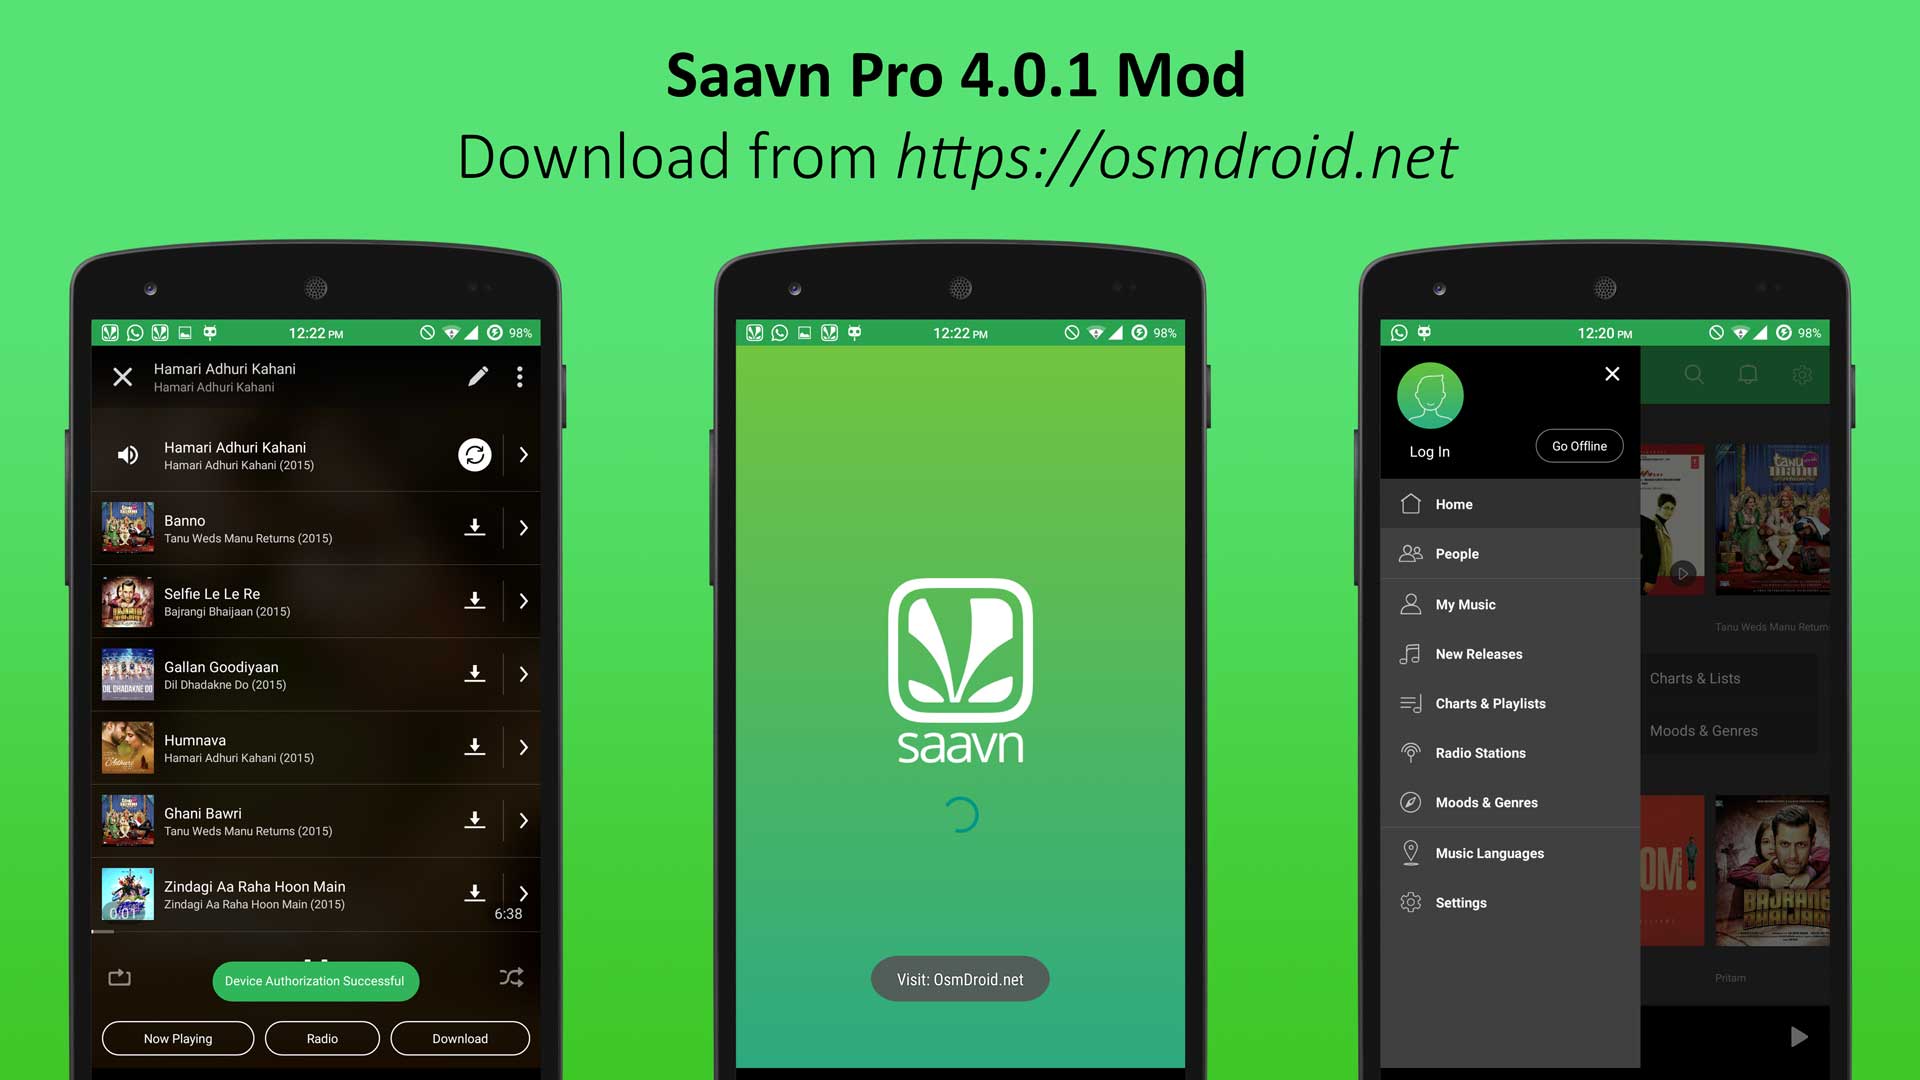 Saavn Pro 4.0.1 Featured Image